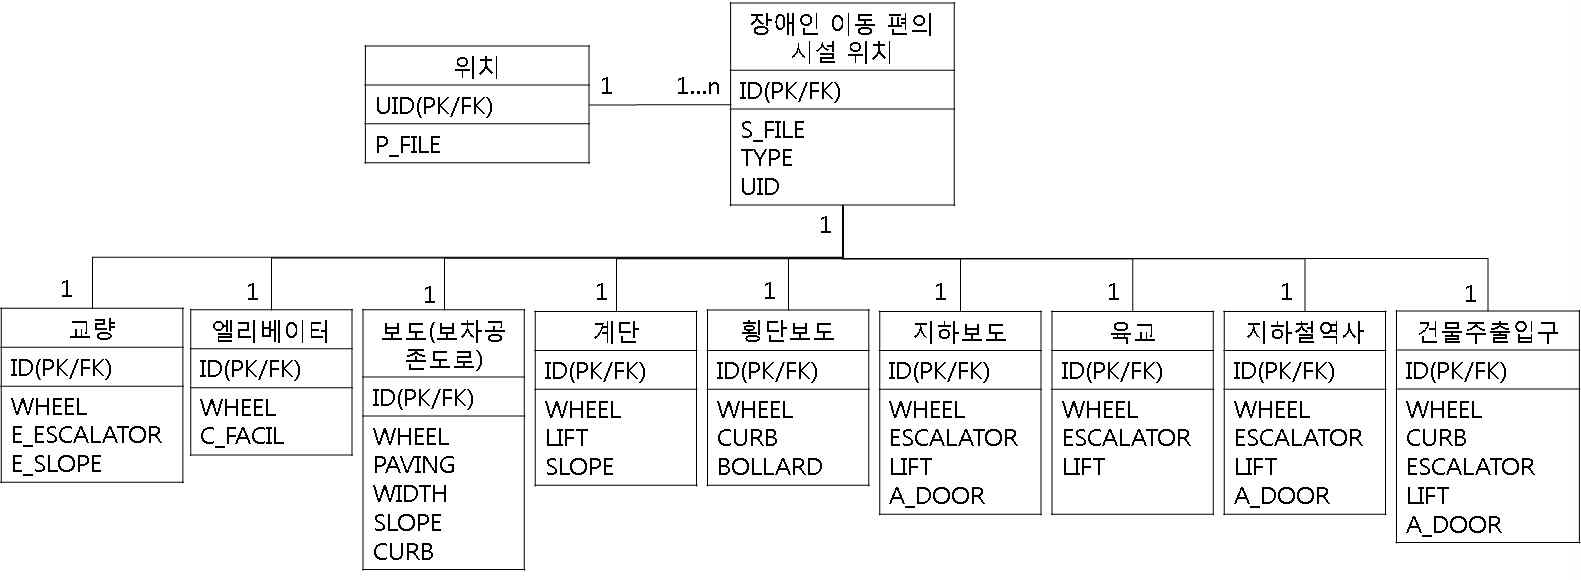 VGI 플랫폼 데이터베이스의 ERD